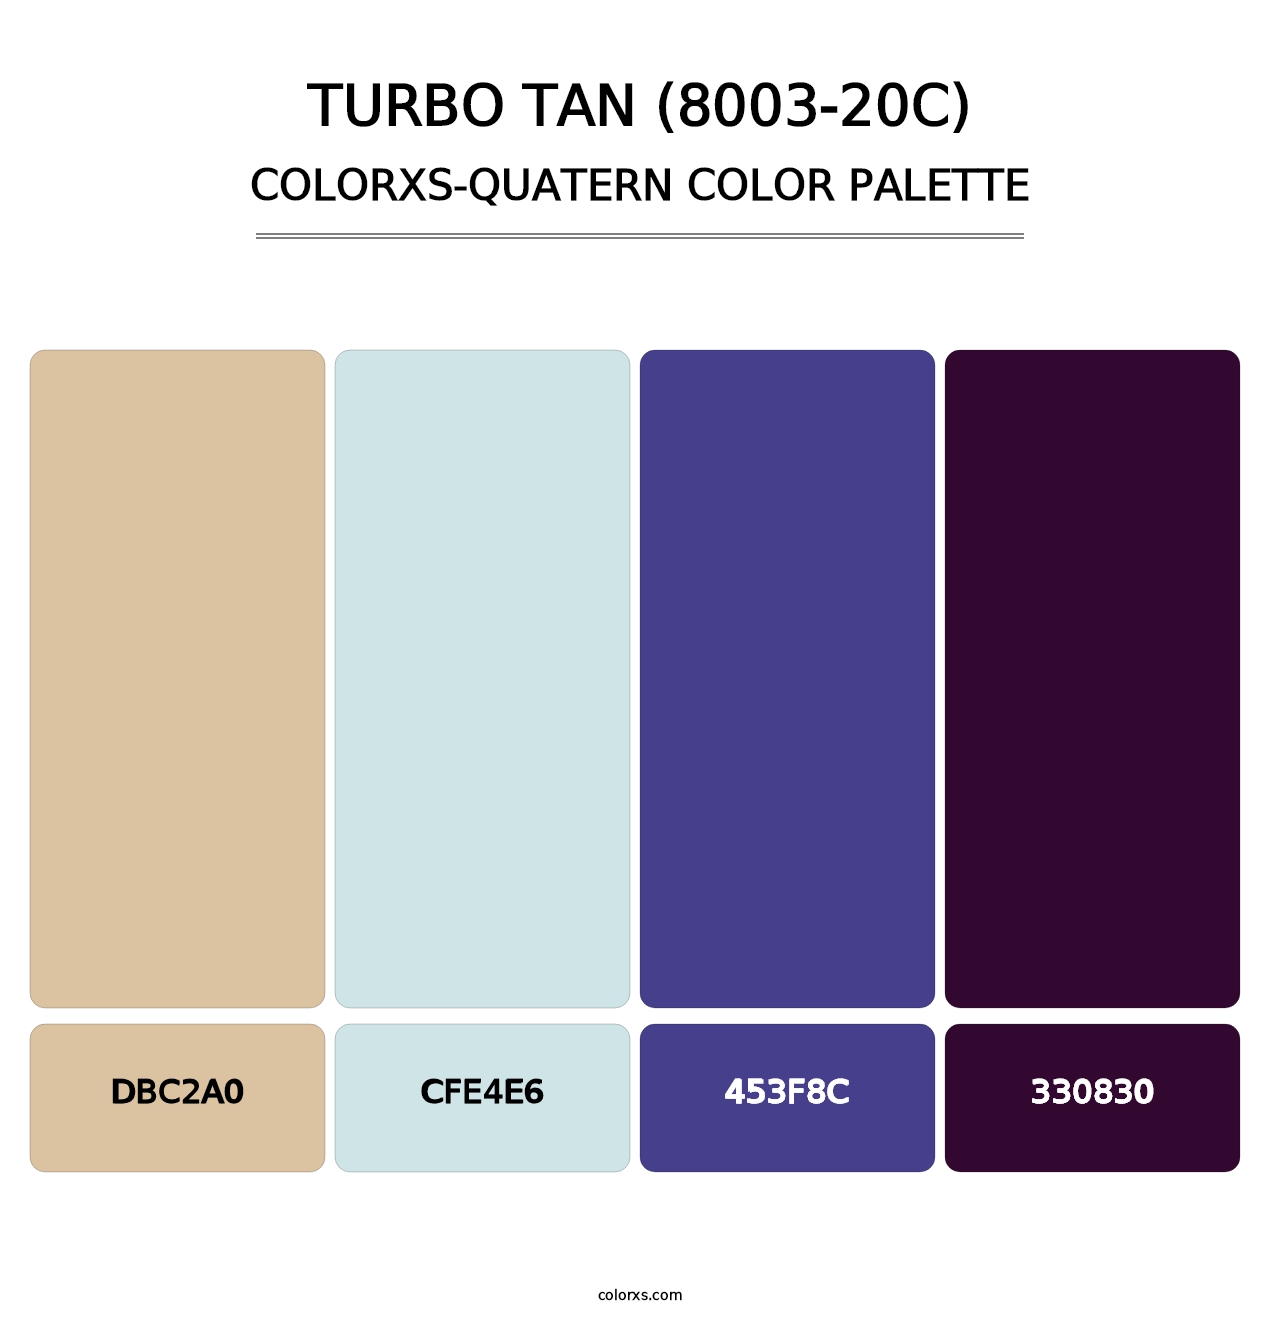 Turbo Tan (8003-20C) - Colorxs Quatern Palette